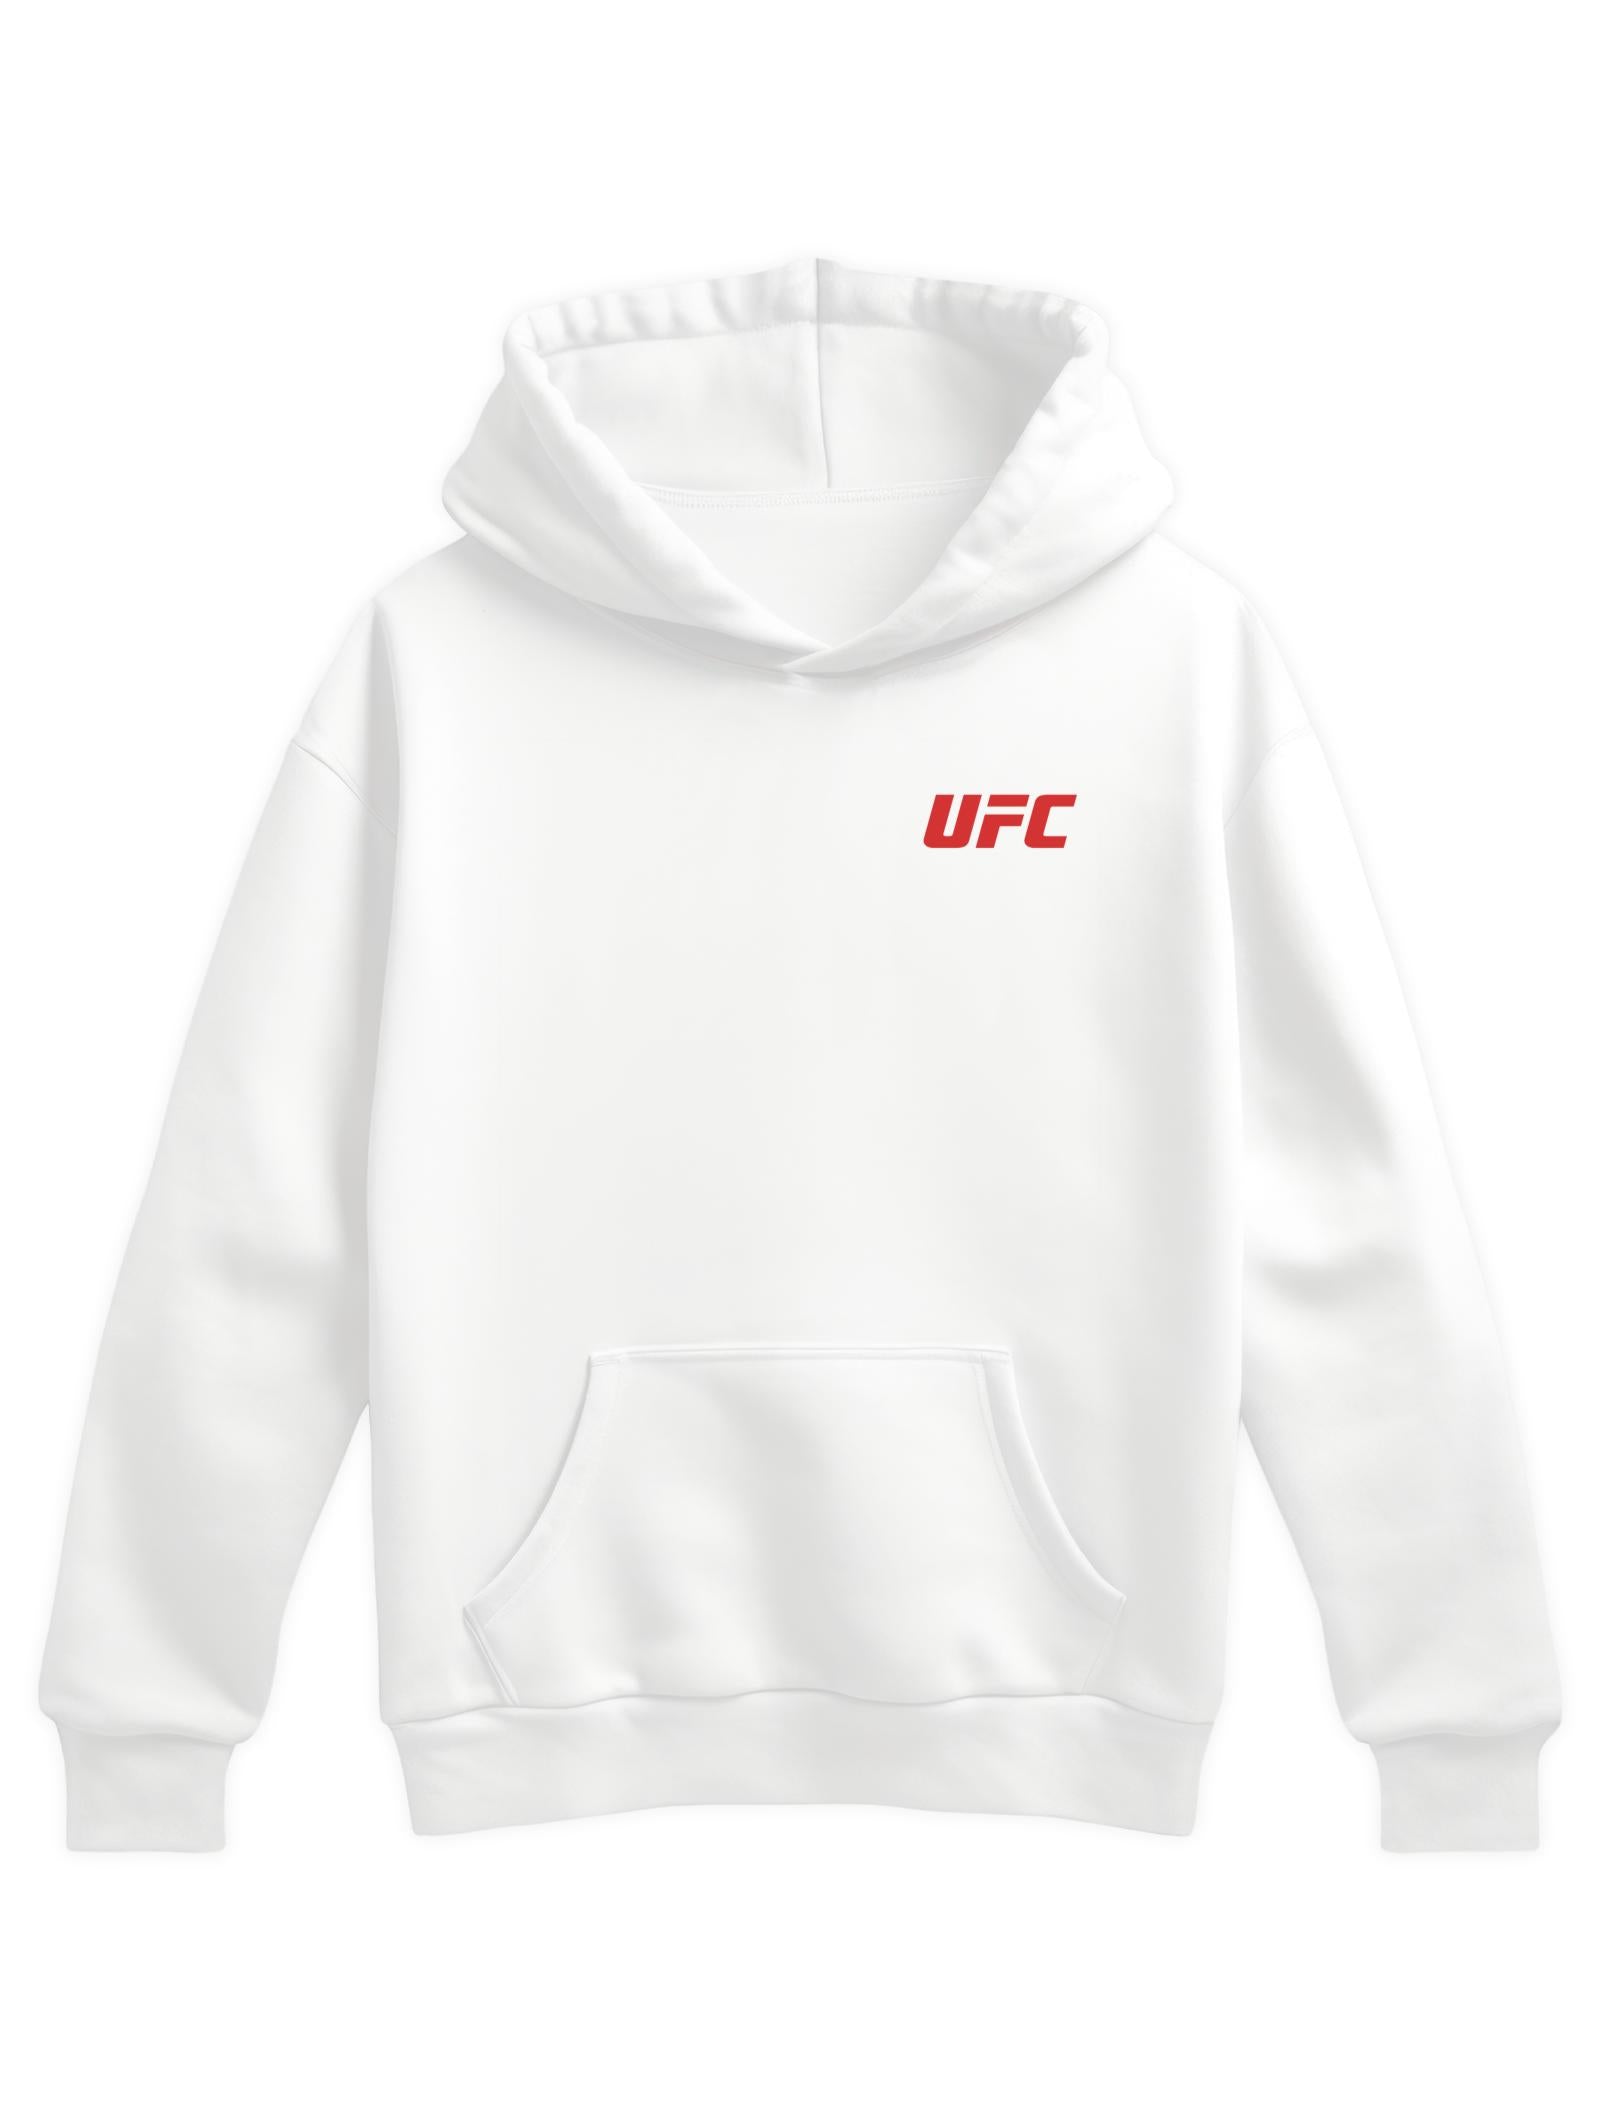 UFC Hoodie Model 1